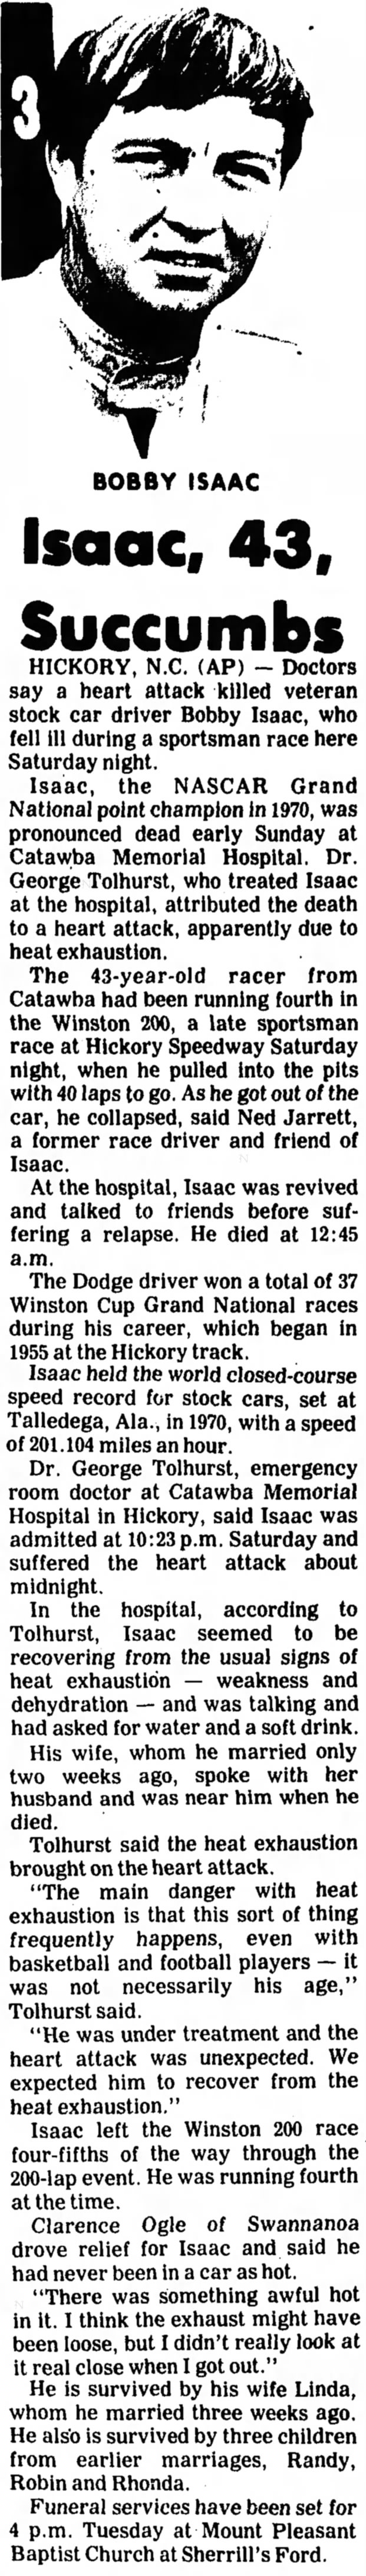 Death of race car driver Bobby Isaac